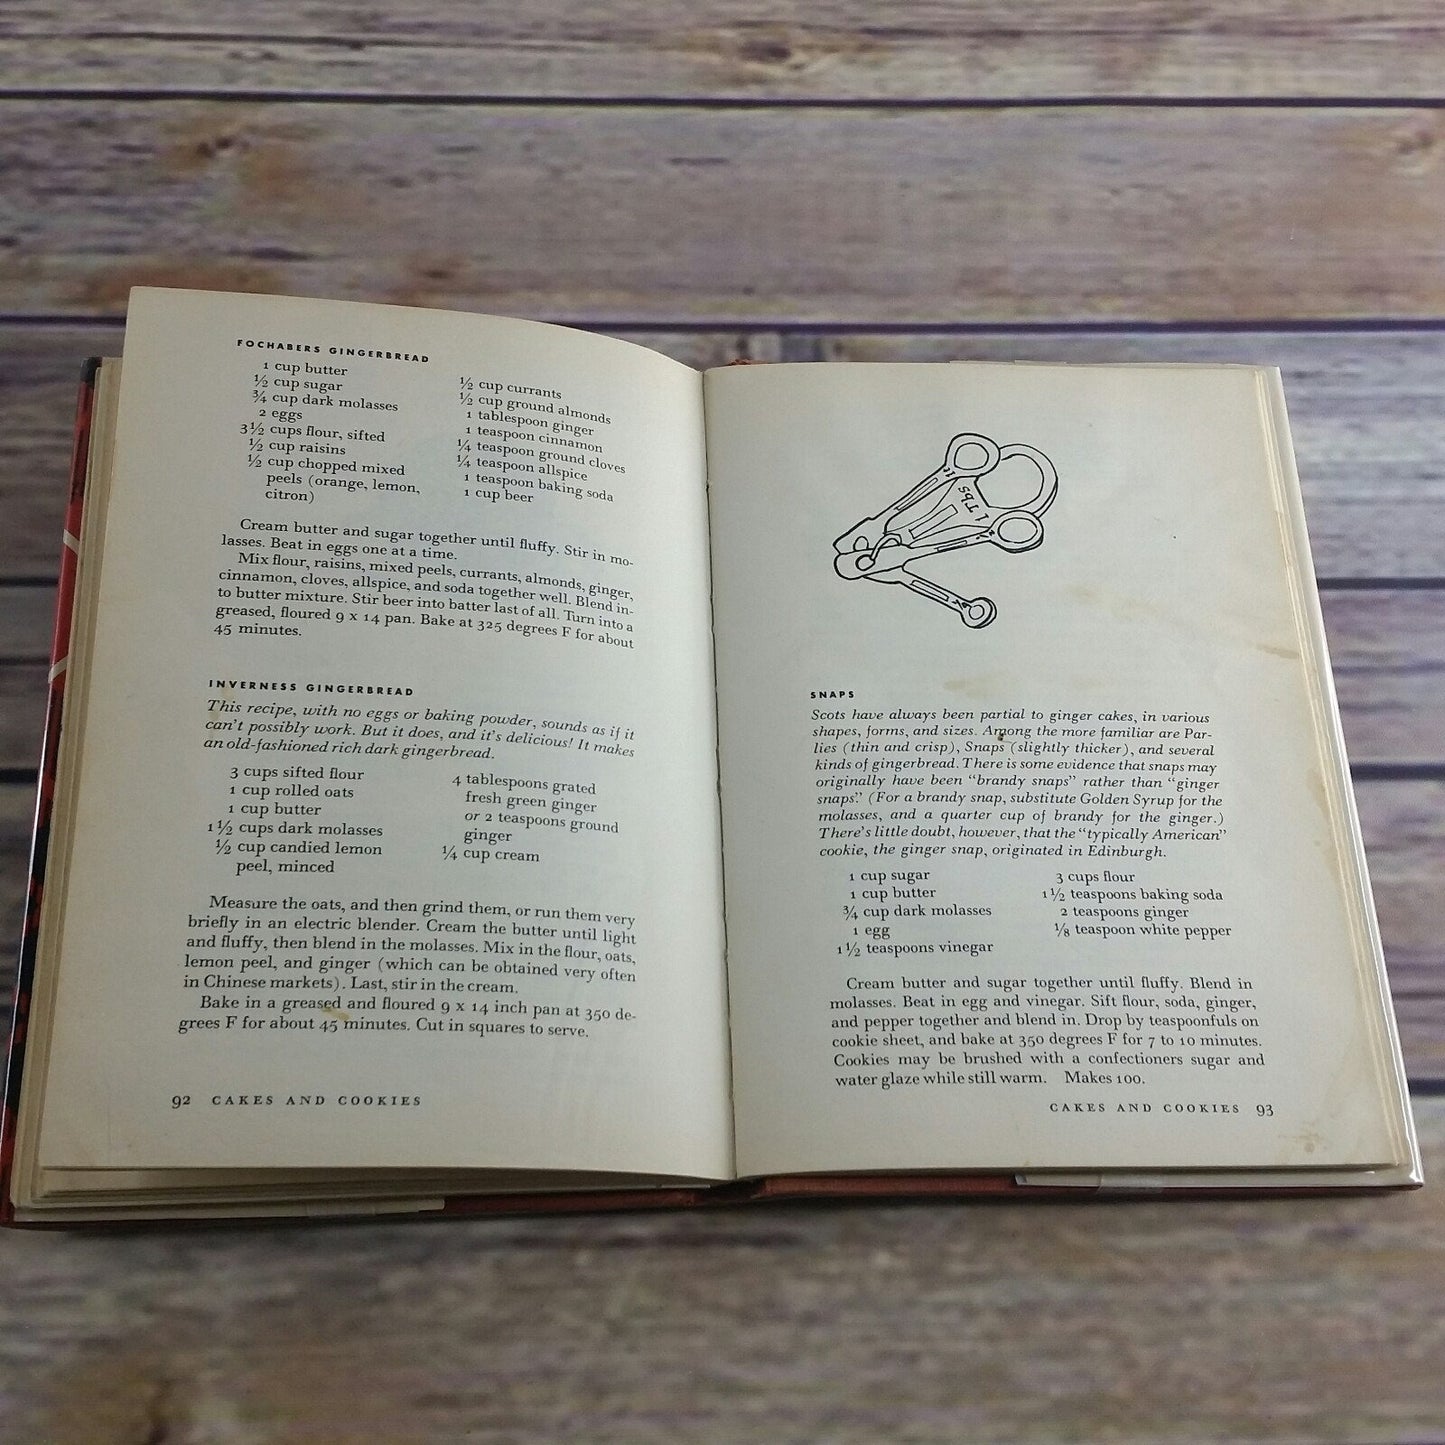 Vintage Cookbook The Highlanders Cookbook Recipes from Scotland 1966 Hardcover Scottish Recipes Sheila Cameron